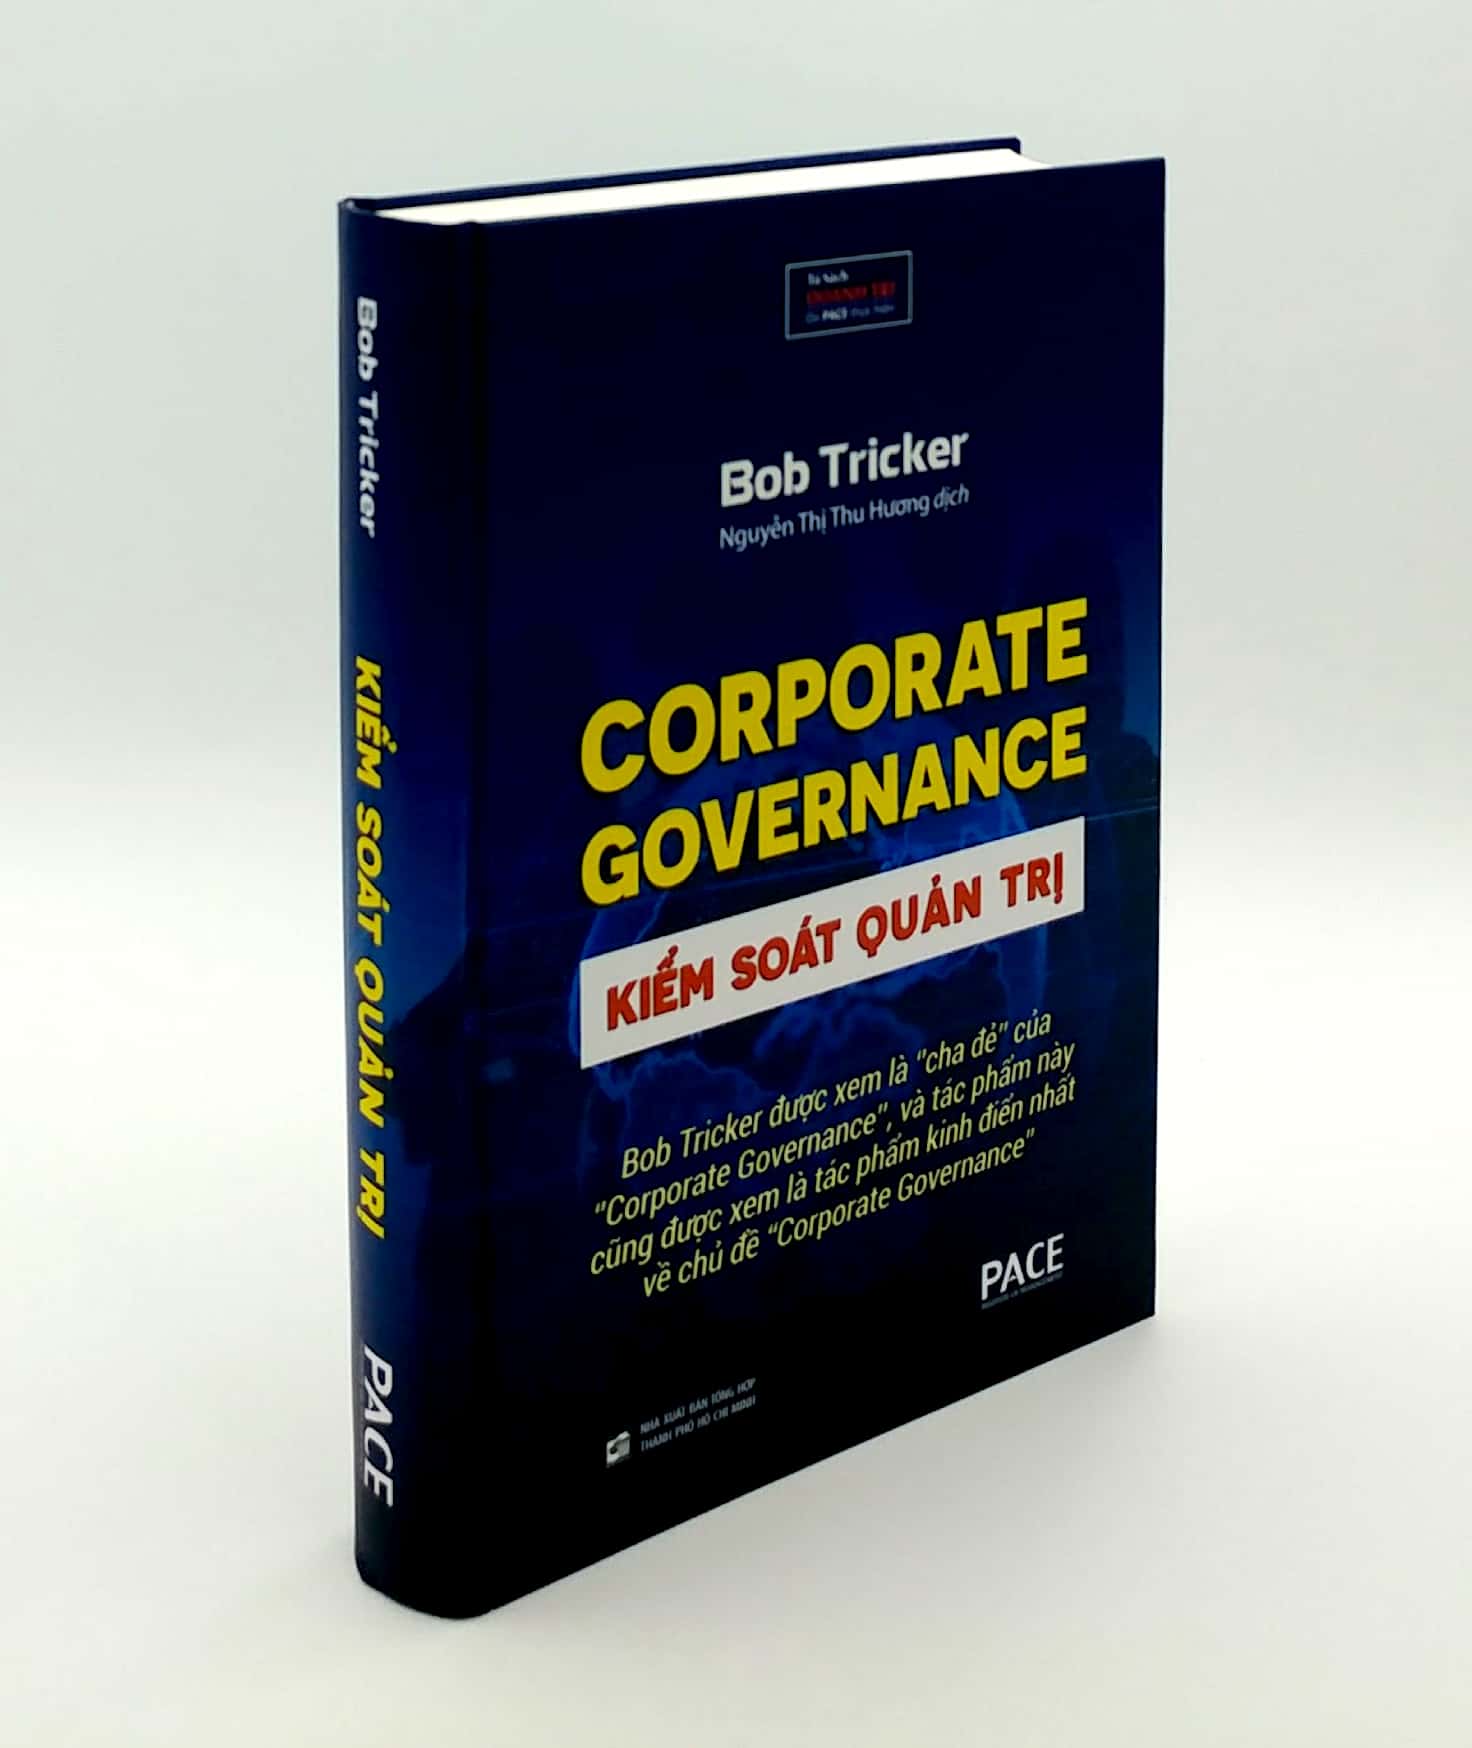 Kiểm Soát Quản Trị - Corporate Governance PDF